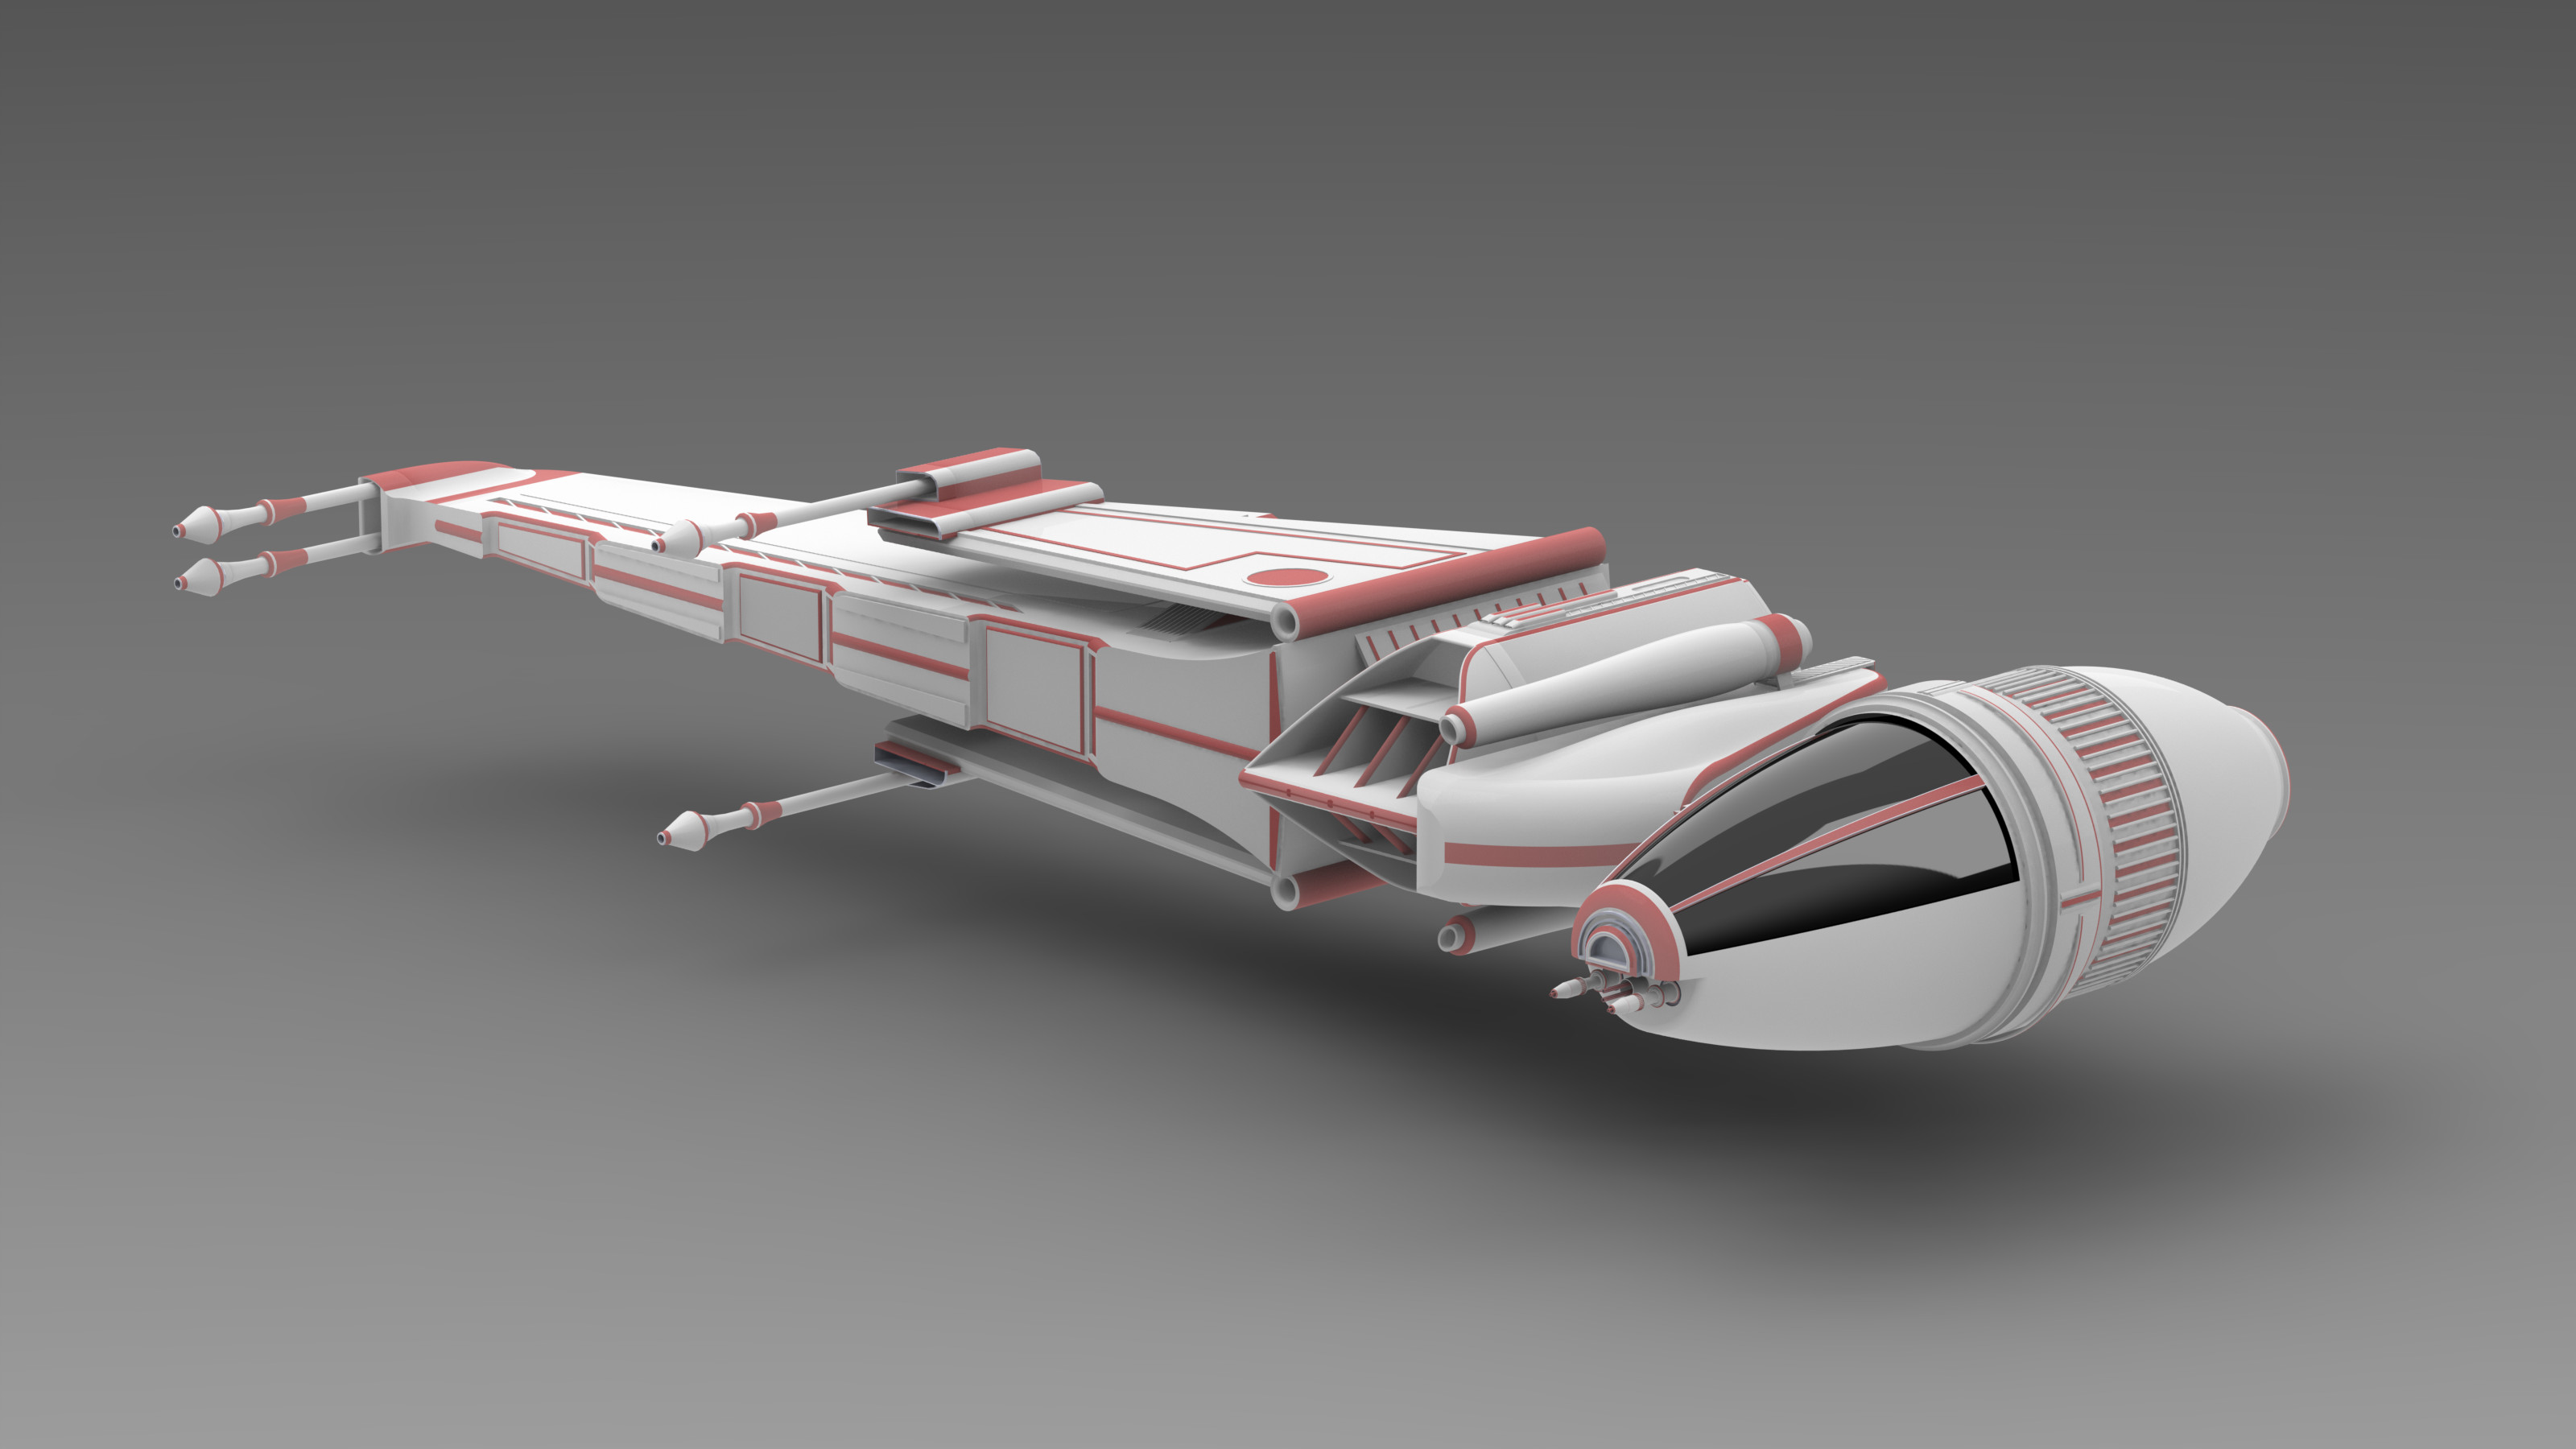 star wars b-wing star fighter concept by Republic2033 on DeviantArt